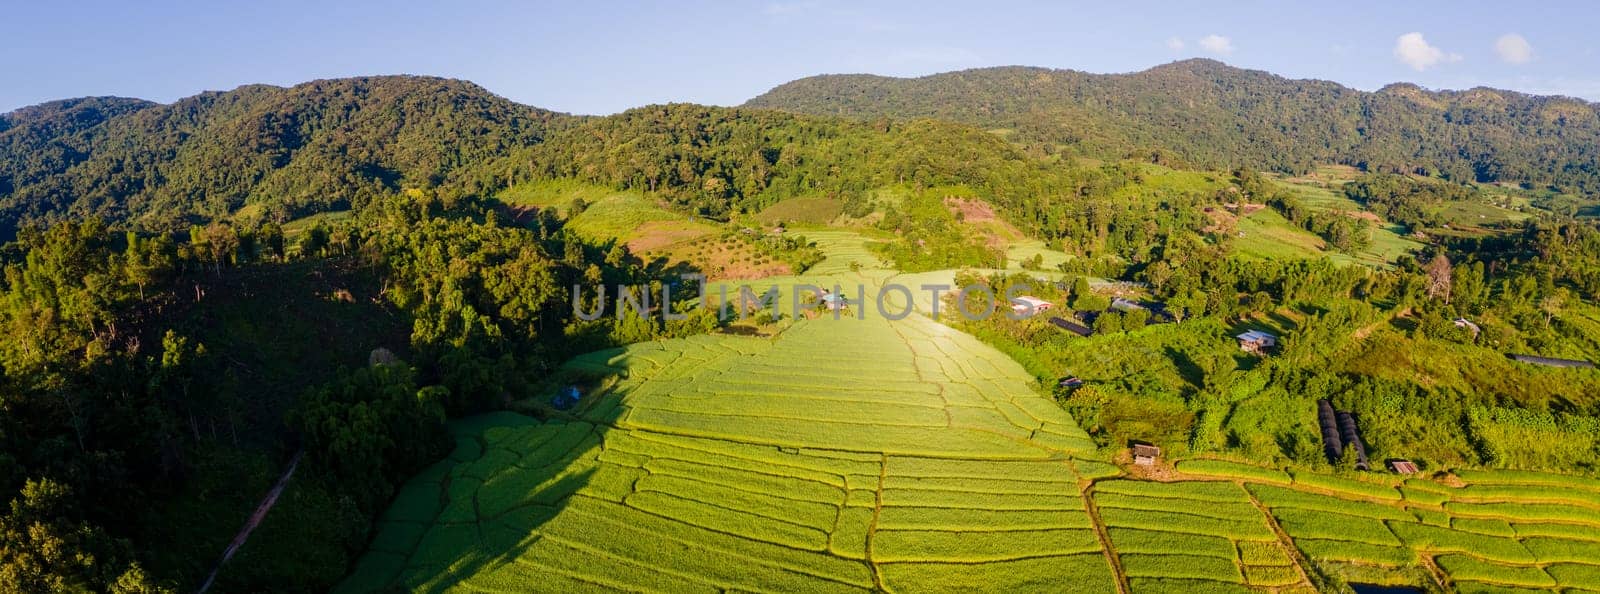 Terraced Rice Field in Chiangmai, Thailand by fokkebok